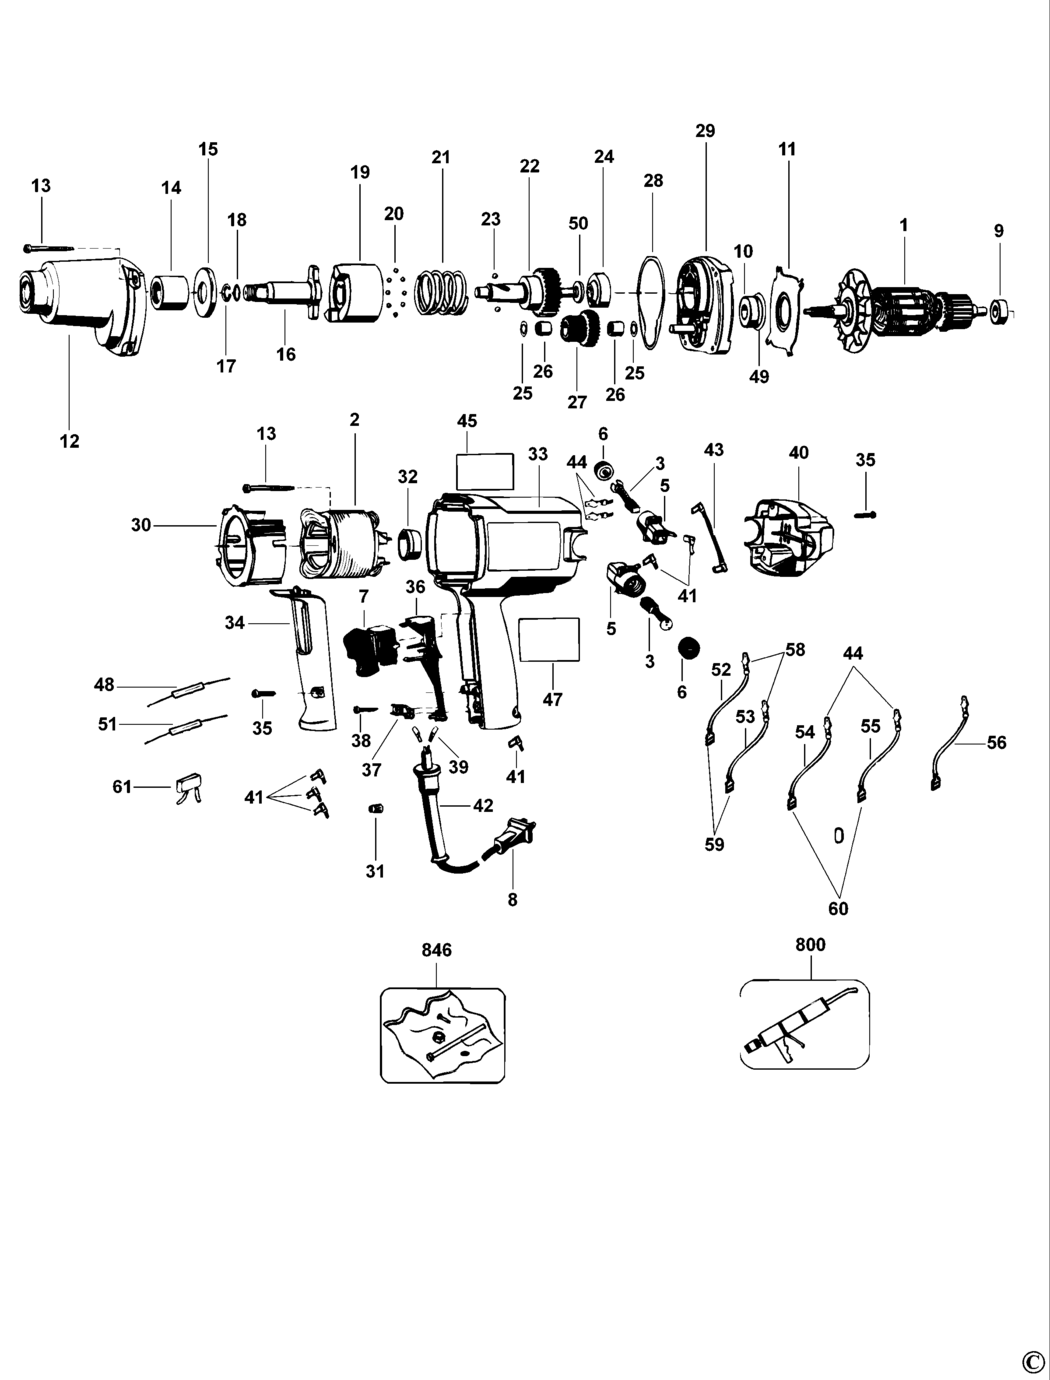 Dewalt DW291 Type 1 Impact Wrench Spare Parts